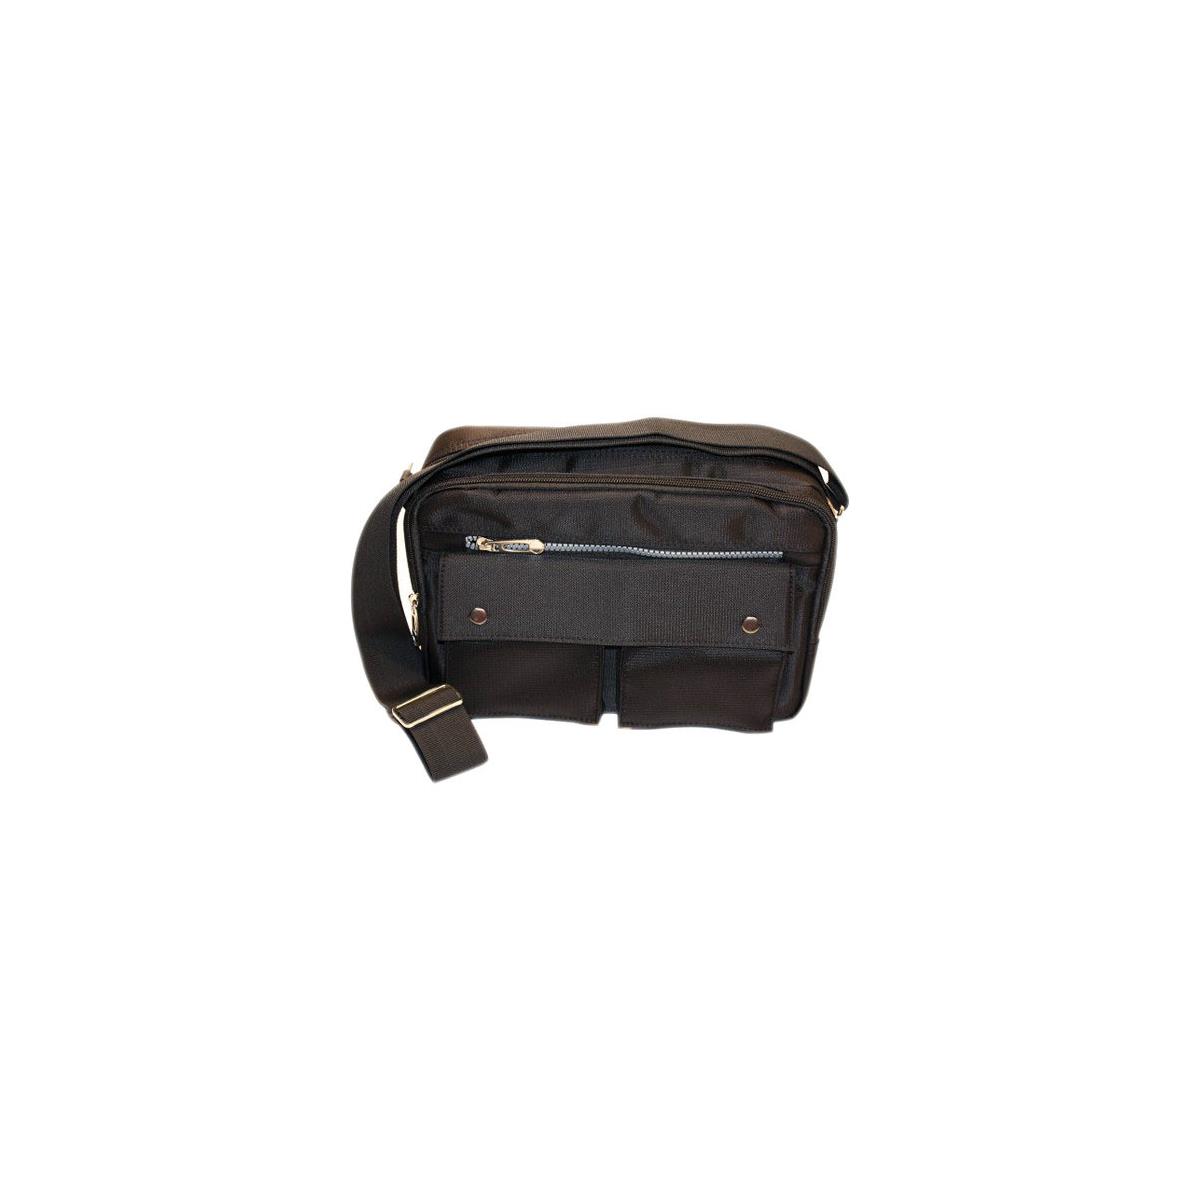 Image of KJB Security Products C1162 550TVL Handbag Covert Camera